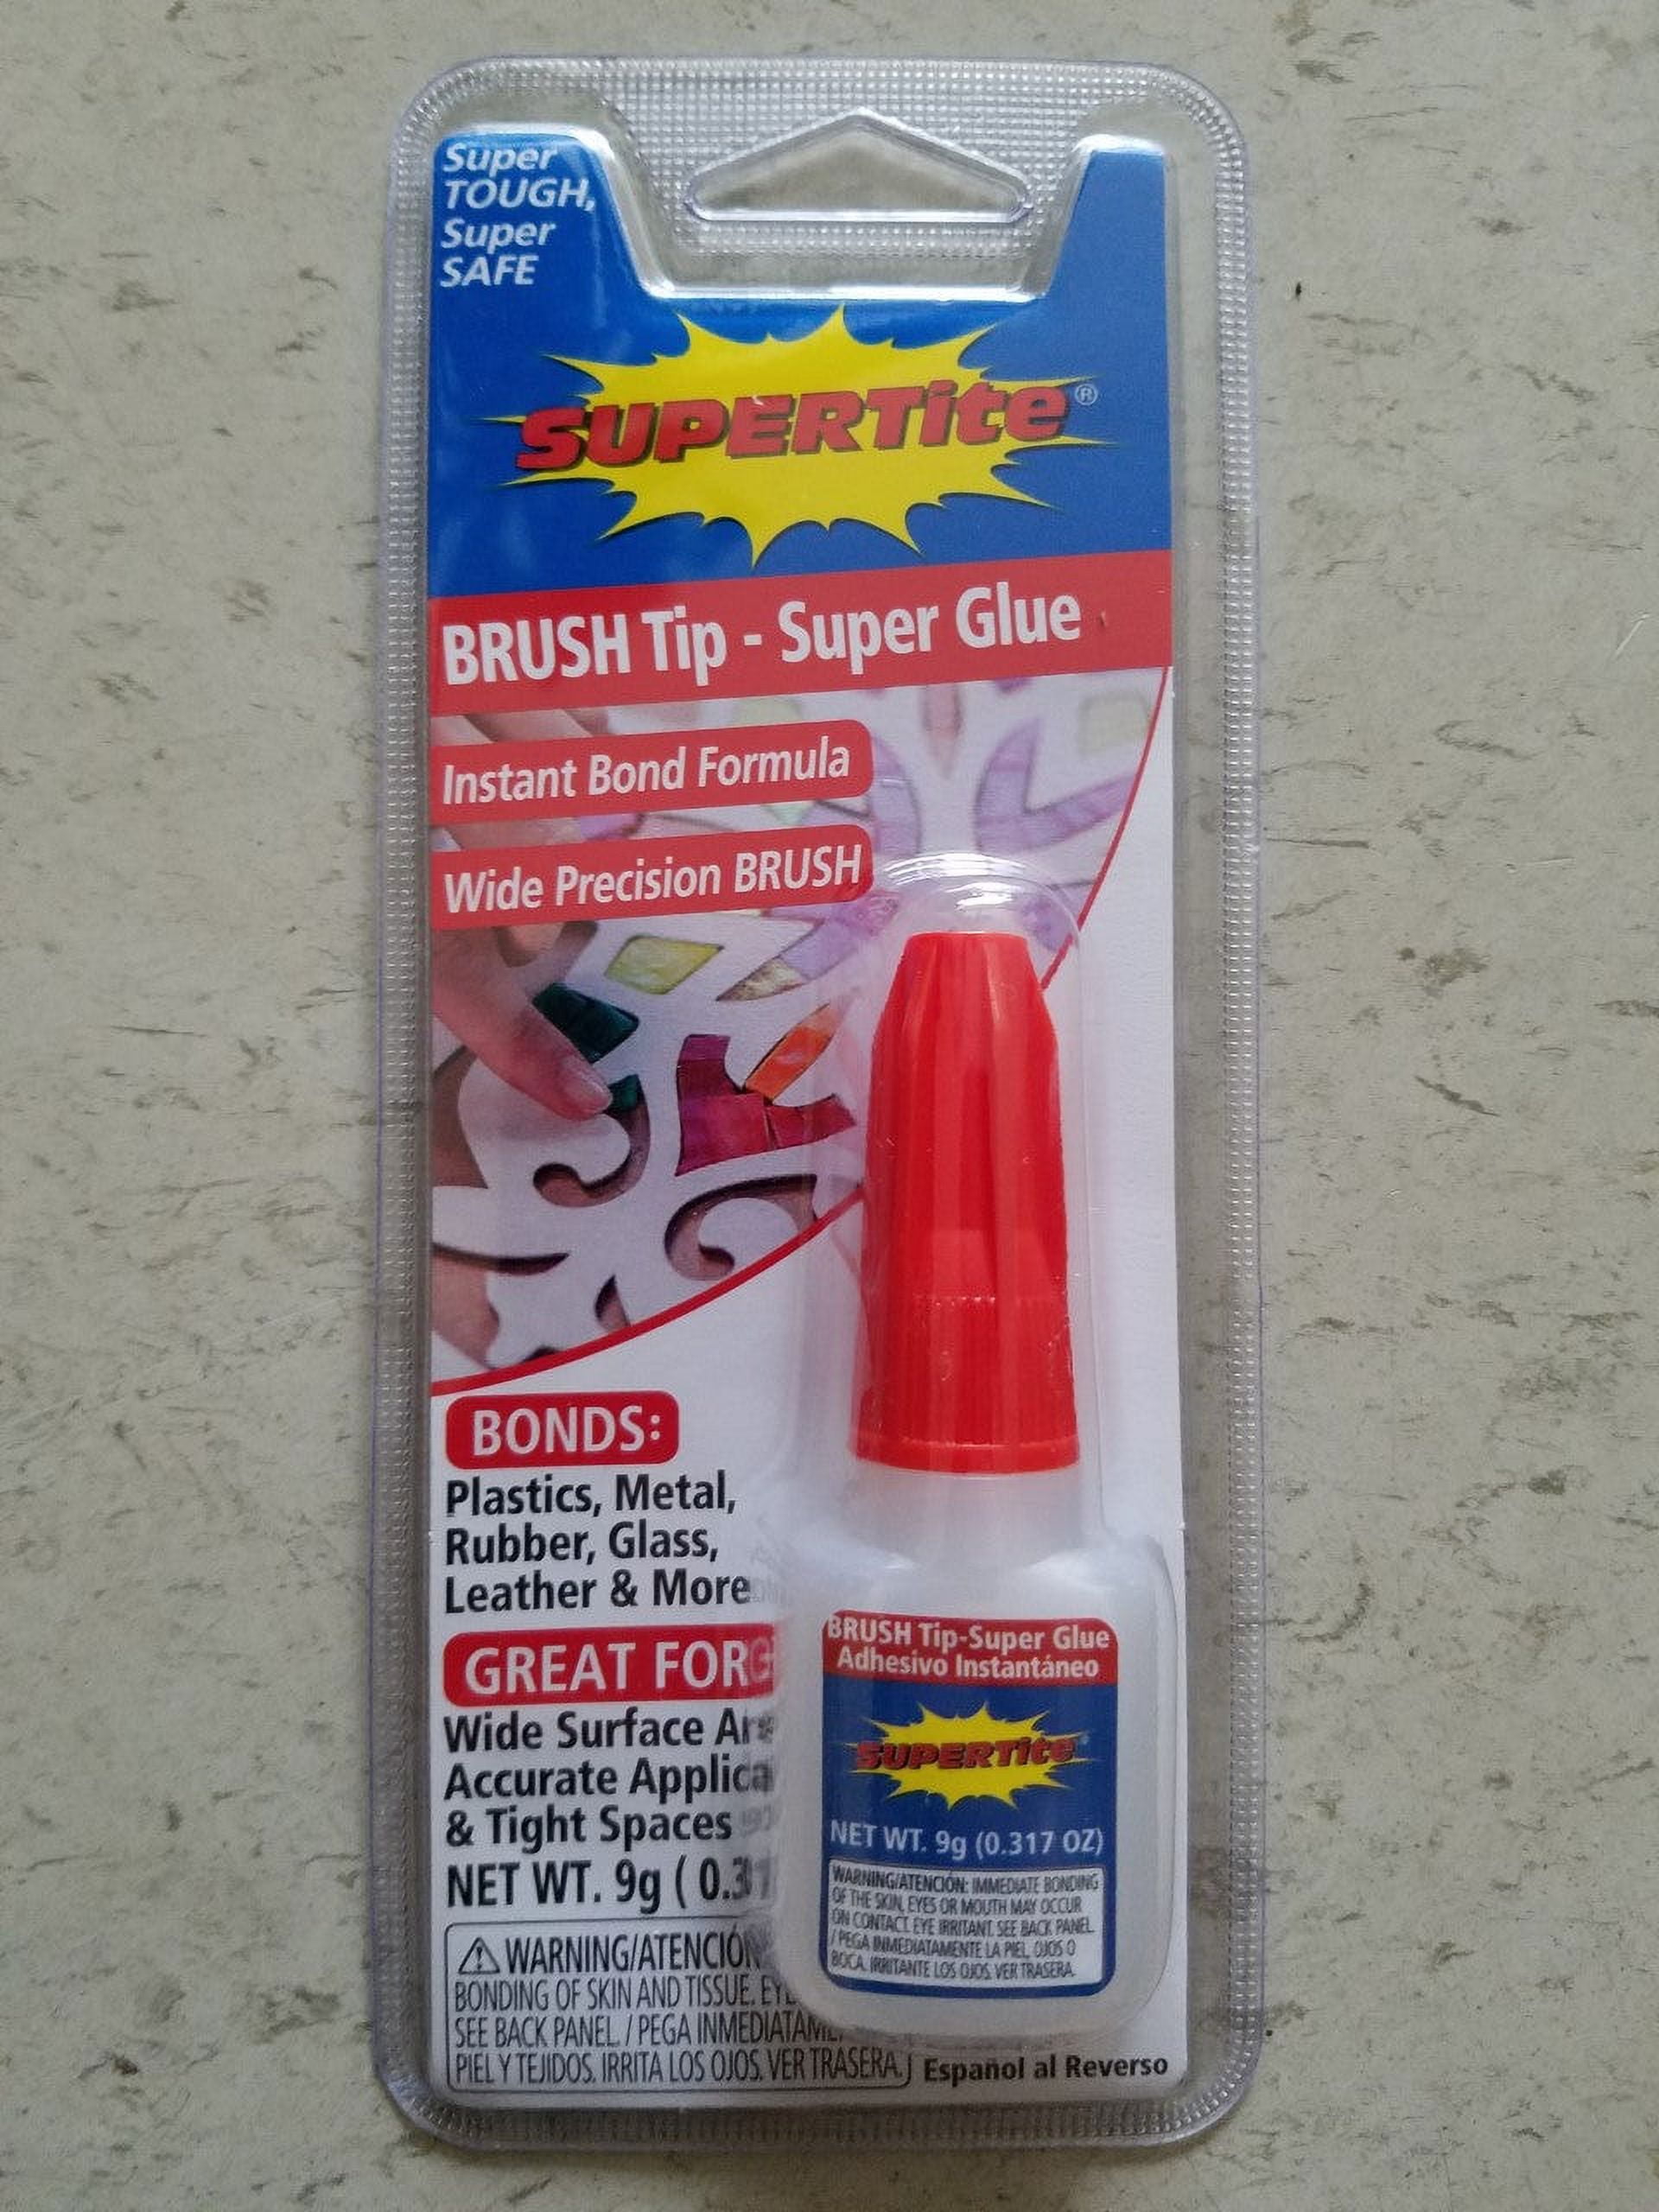 Supertite Dual Tip Max-Glue Pen, 35 G